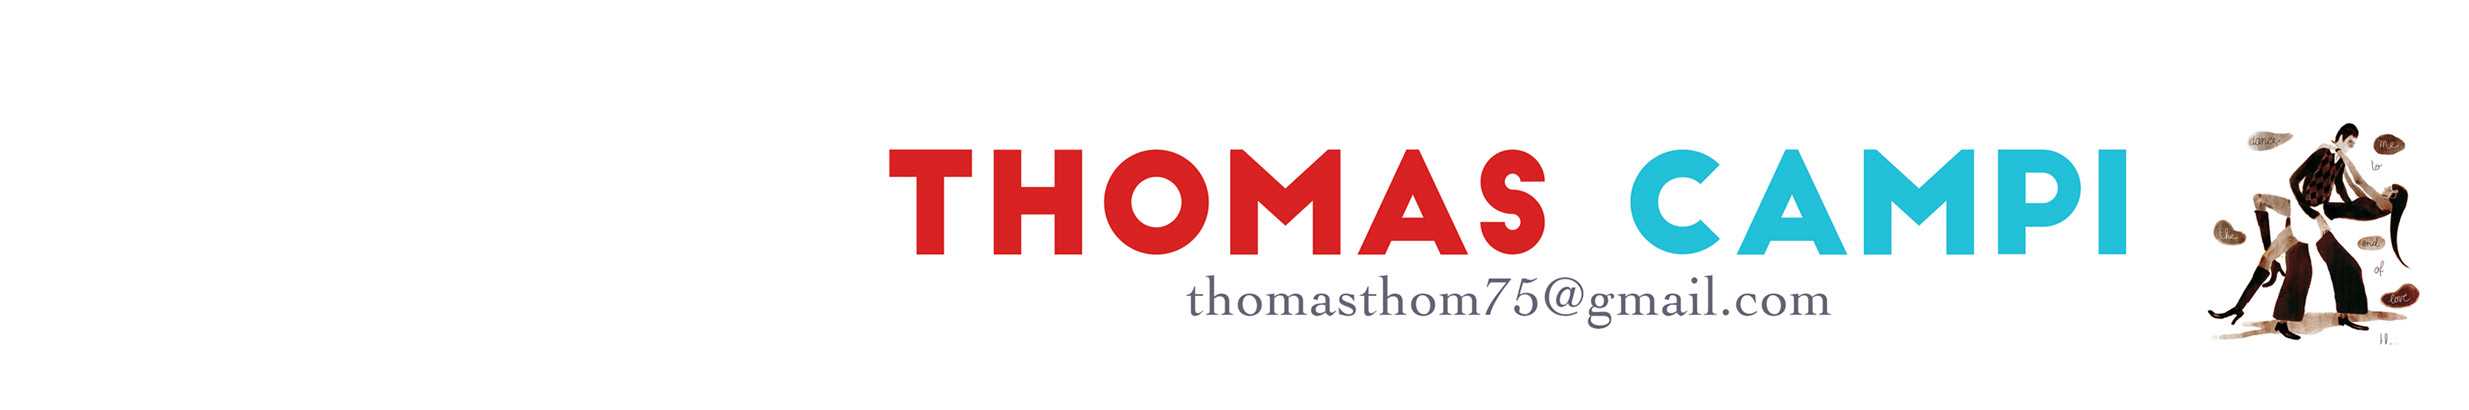 Thomas Campi's profile banner